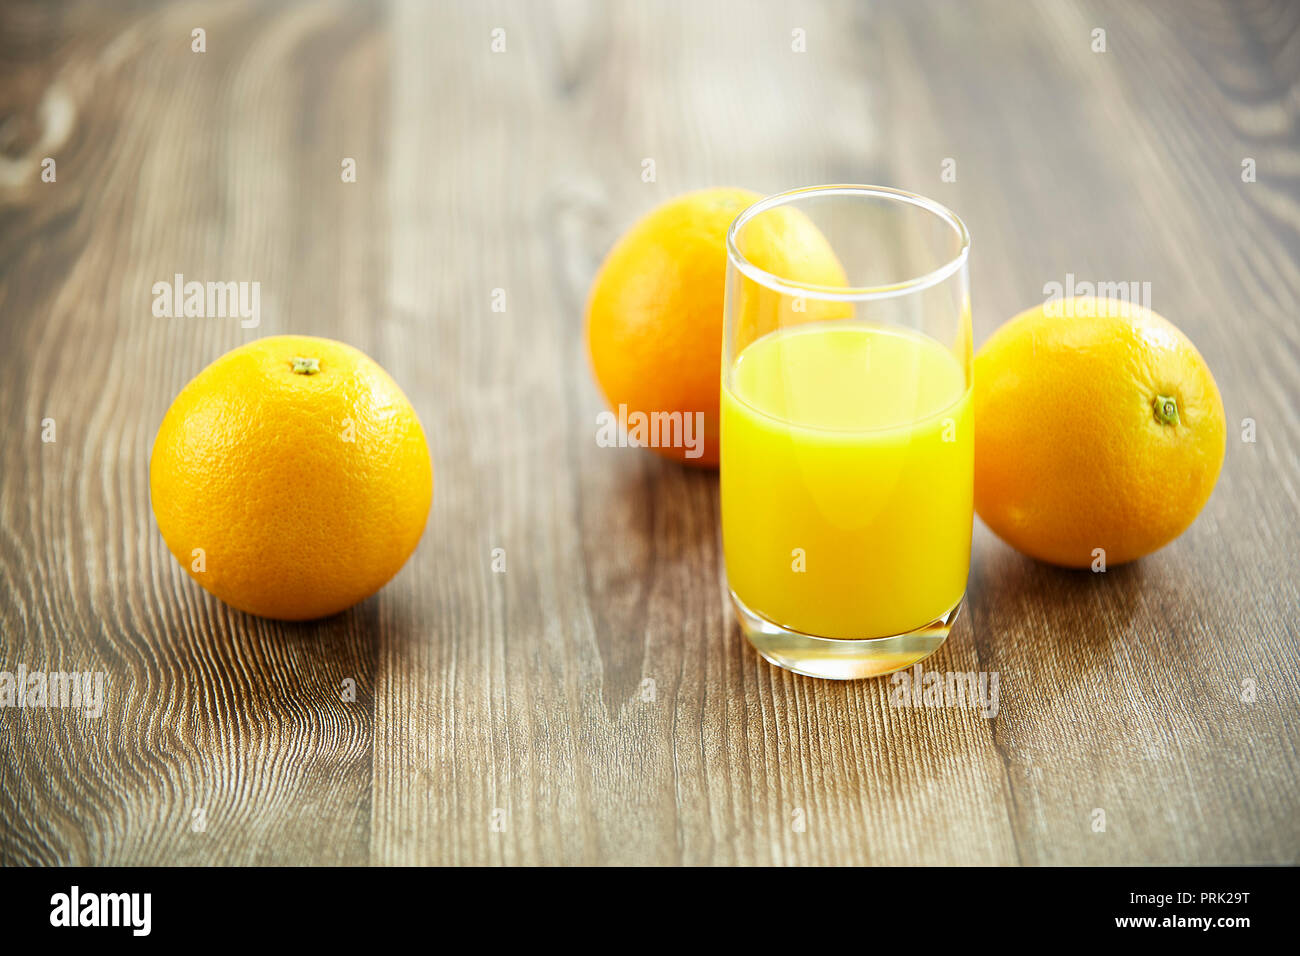 three oranges and a glass of orange juice on hard wood surface. Stock Photo